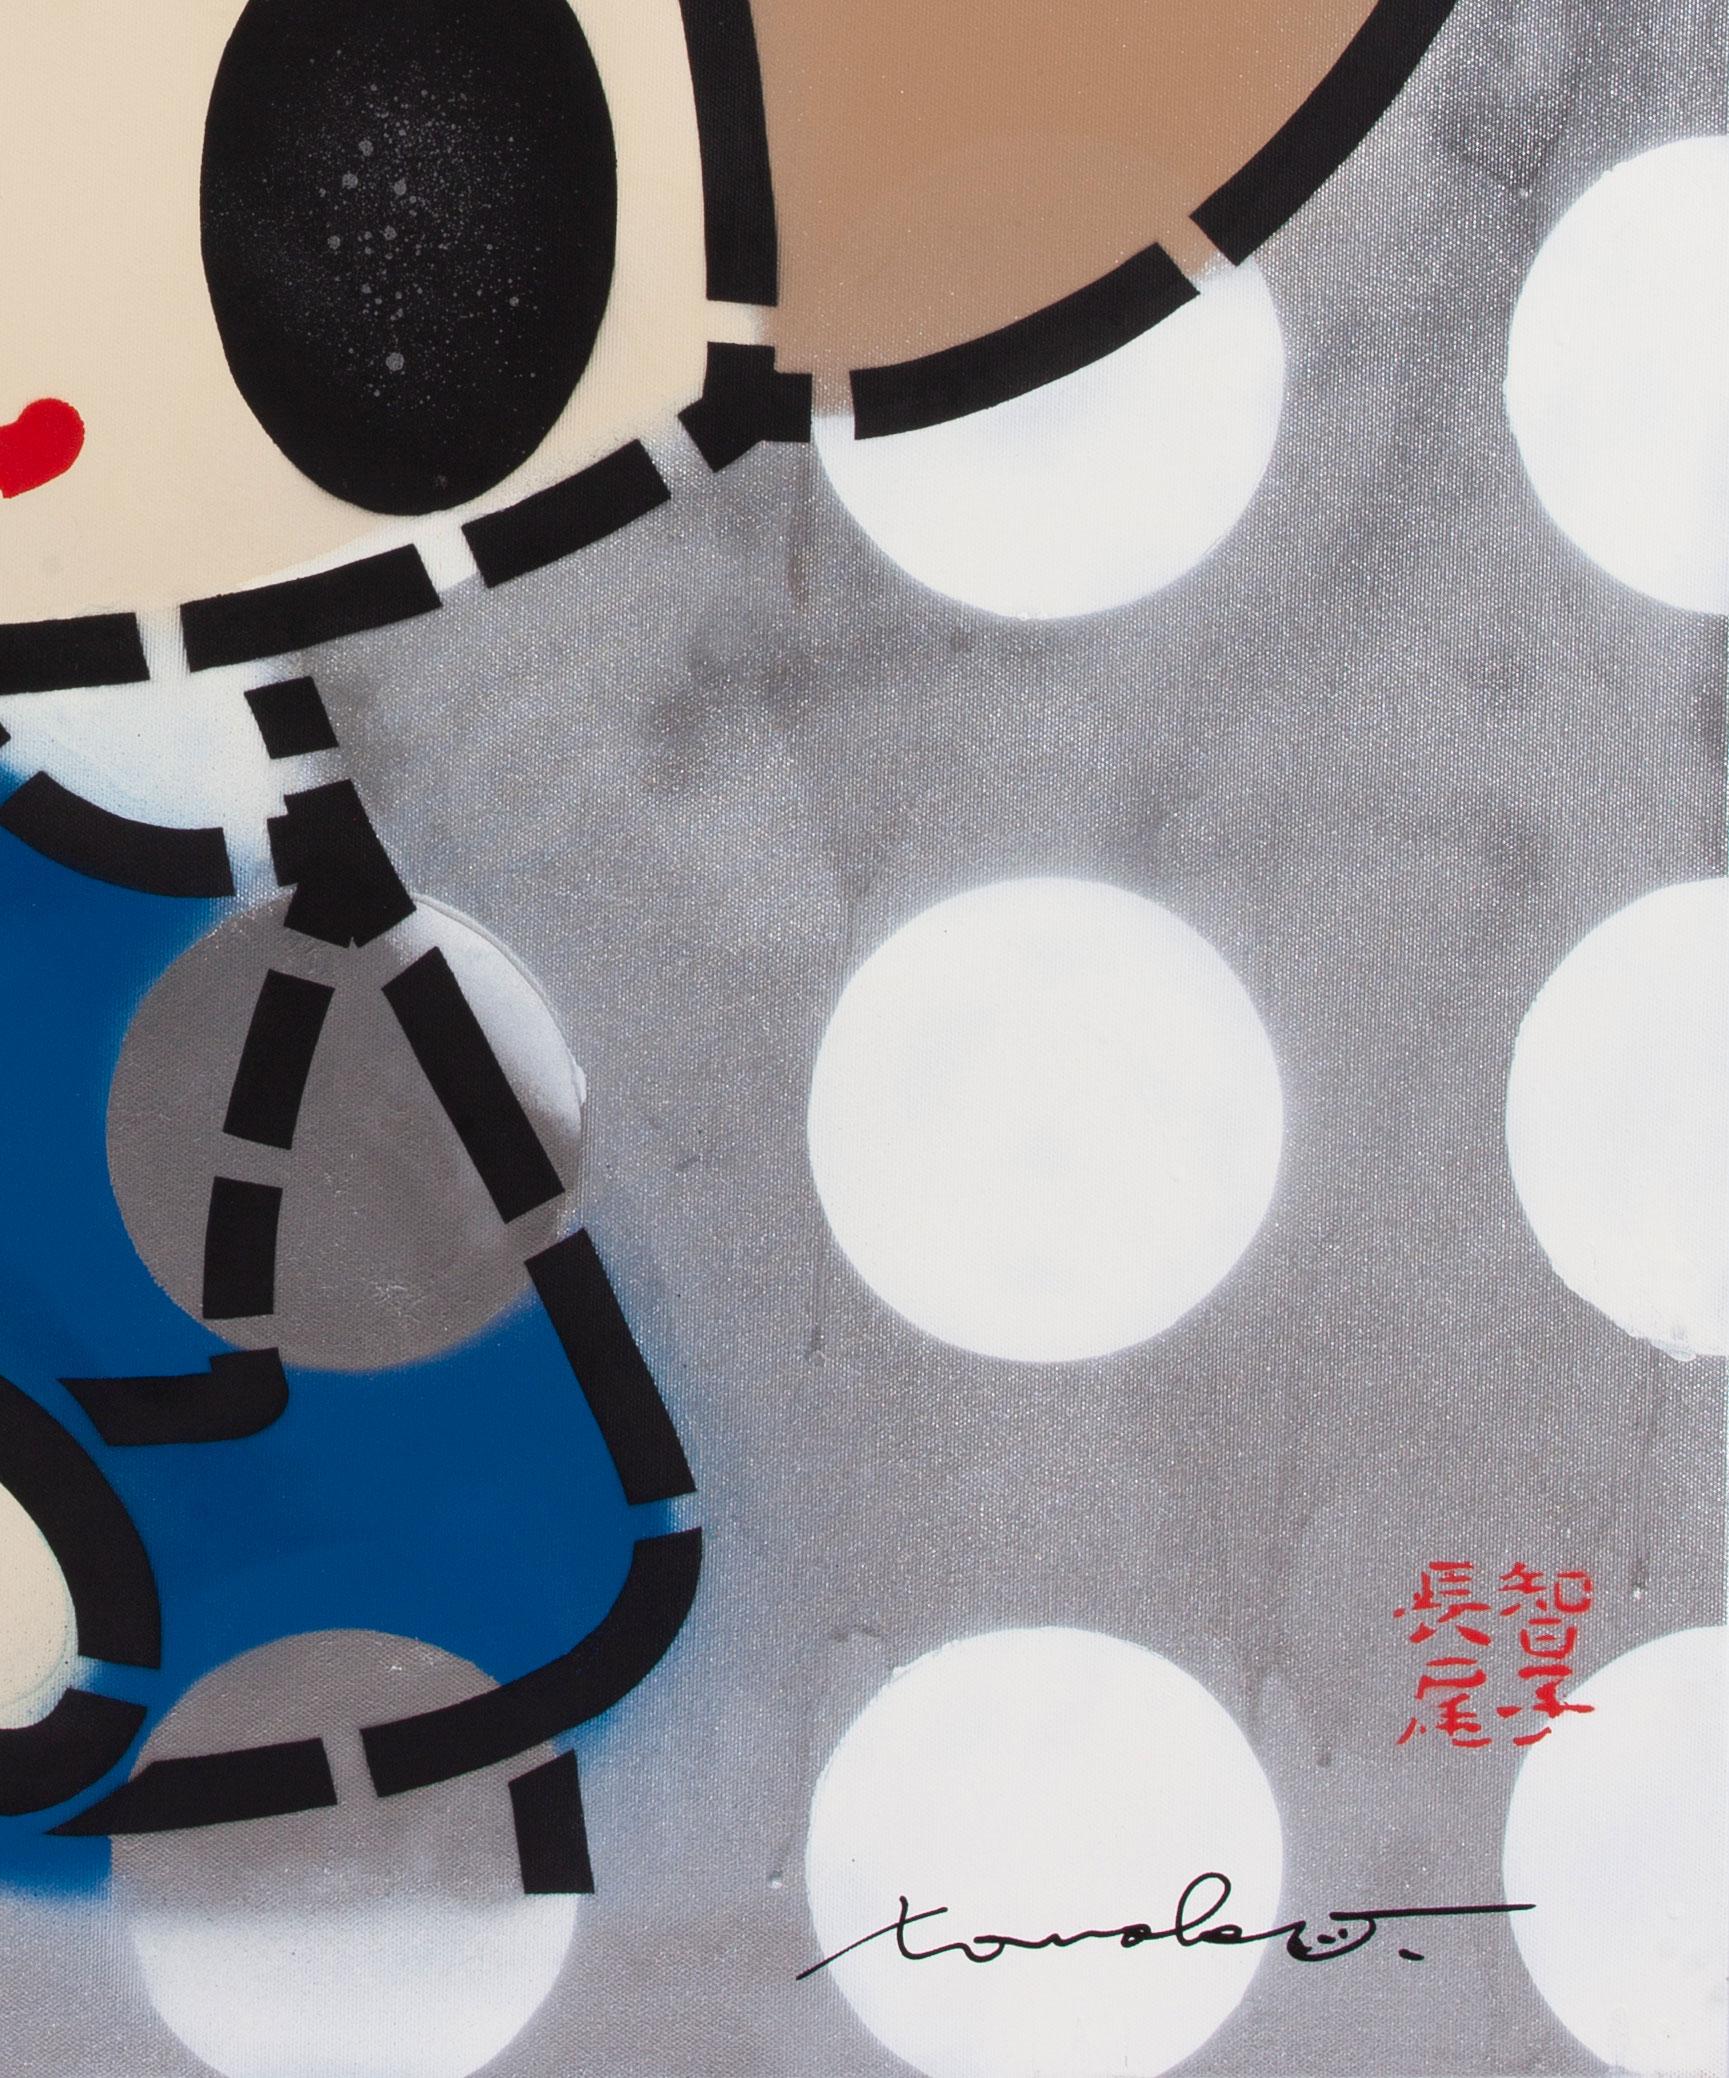 TITLE: Gioconda dots white silver
ARTIST: Tomoko Nagao
YEAR: 2019
MEDIUM TYPE: Painting
MEDIUM/MATERIALS: Spray on canvas
DIMENSIONS: 120 x 100 cm